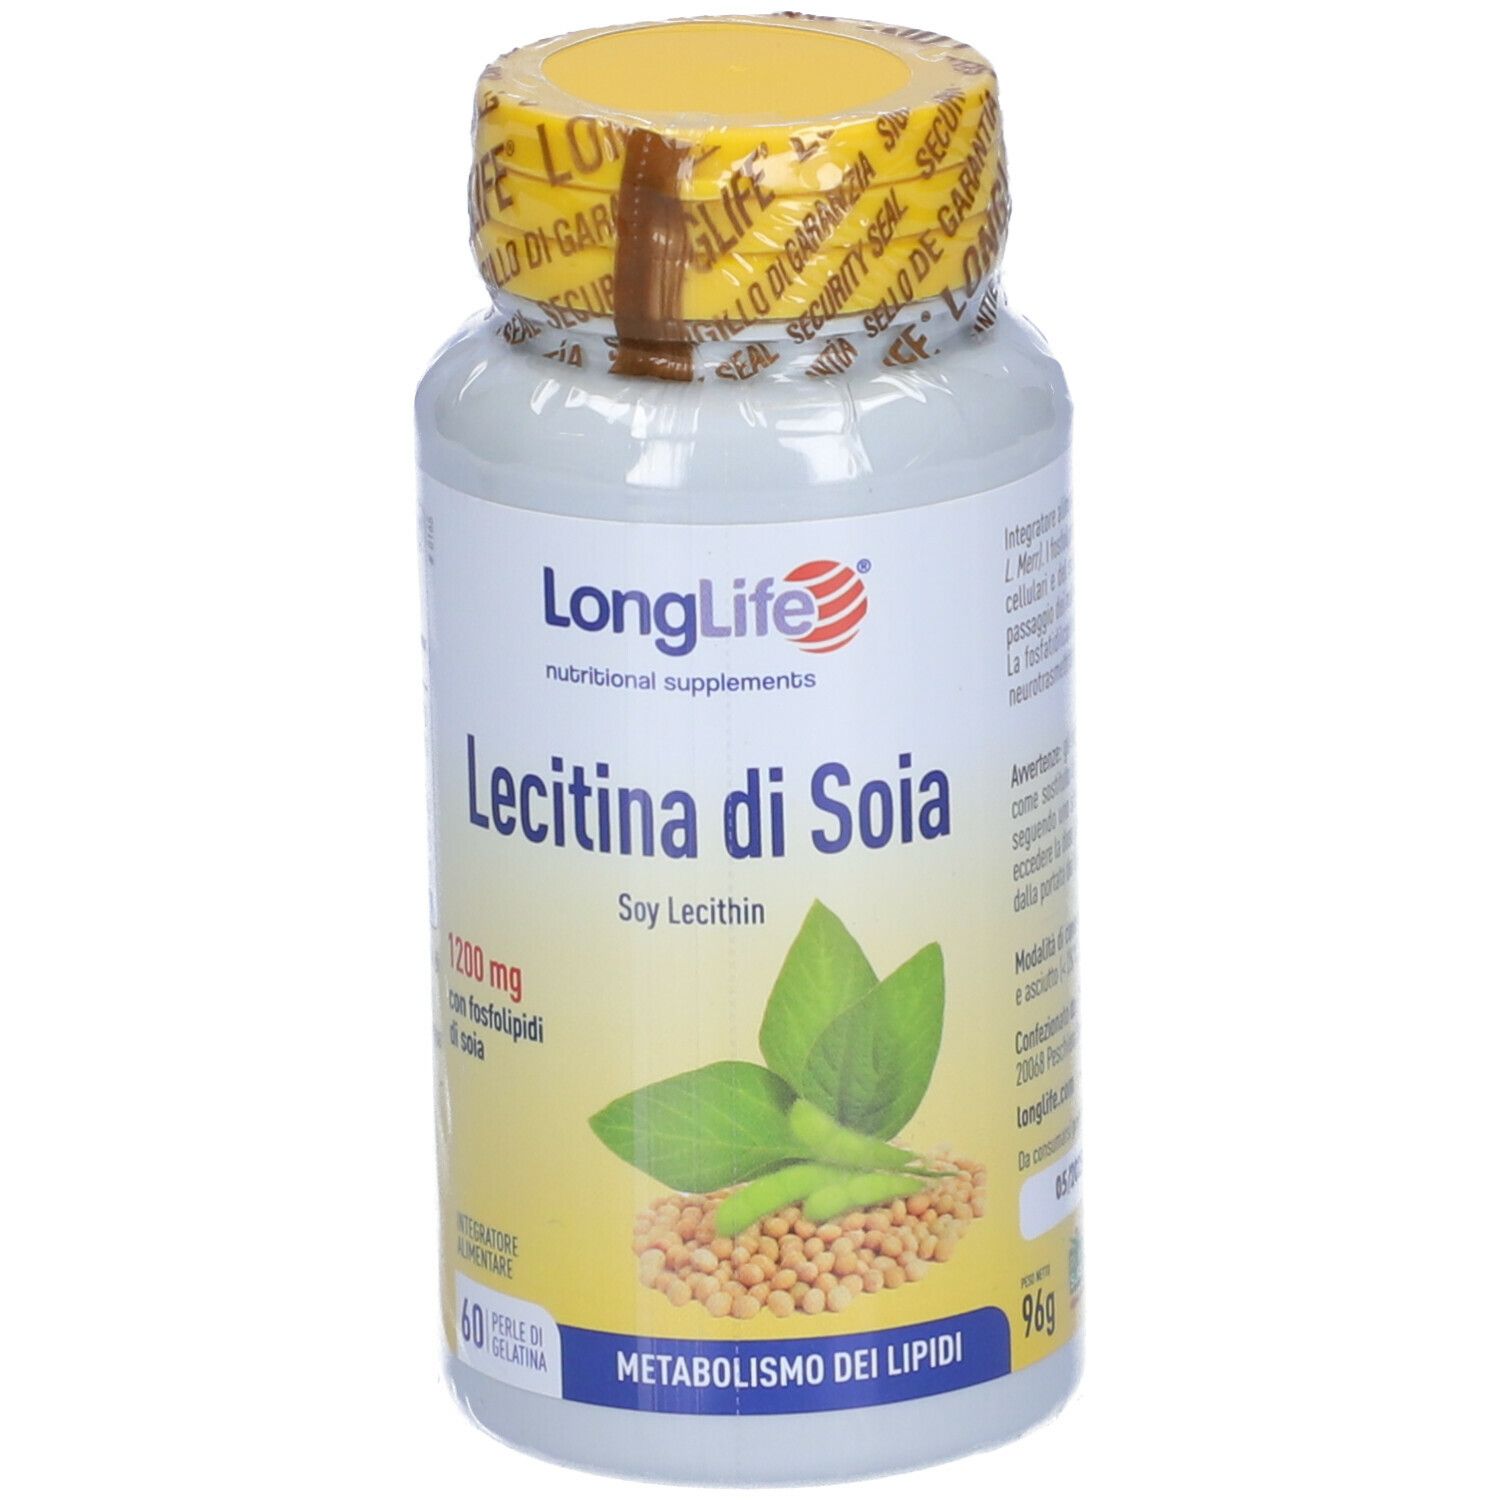 LongLife® Lecitina di Soia 1200 mg